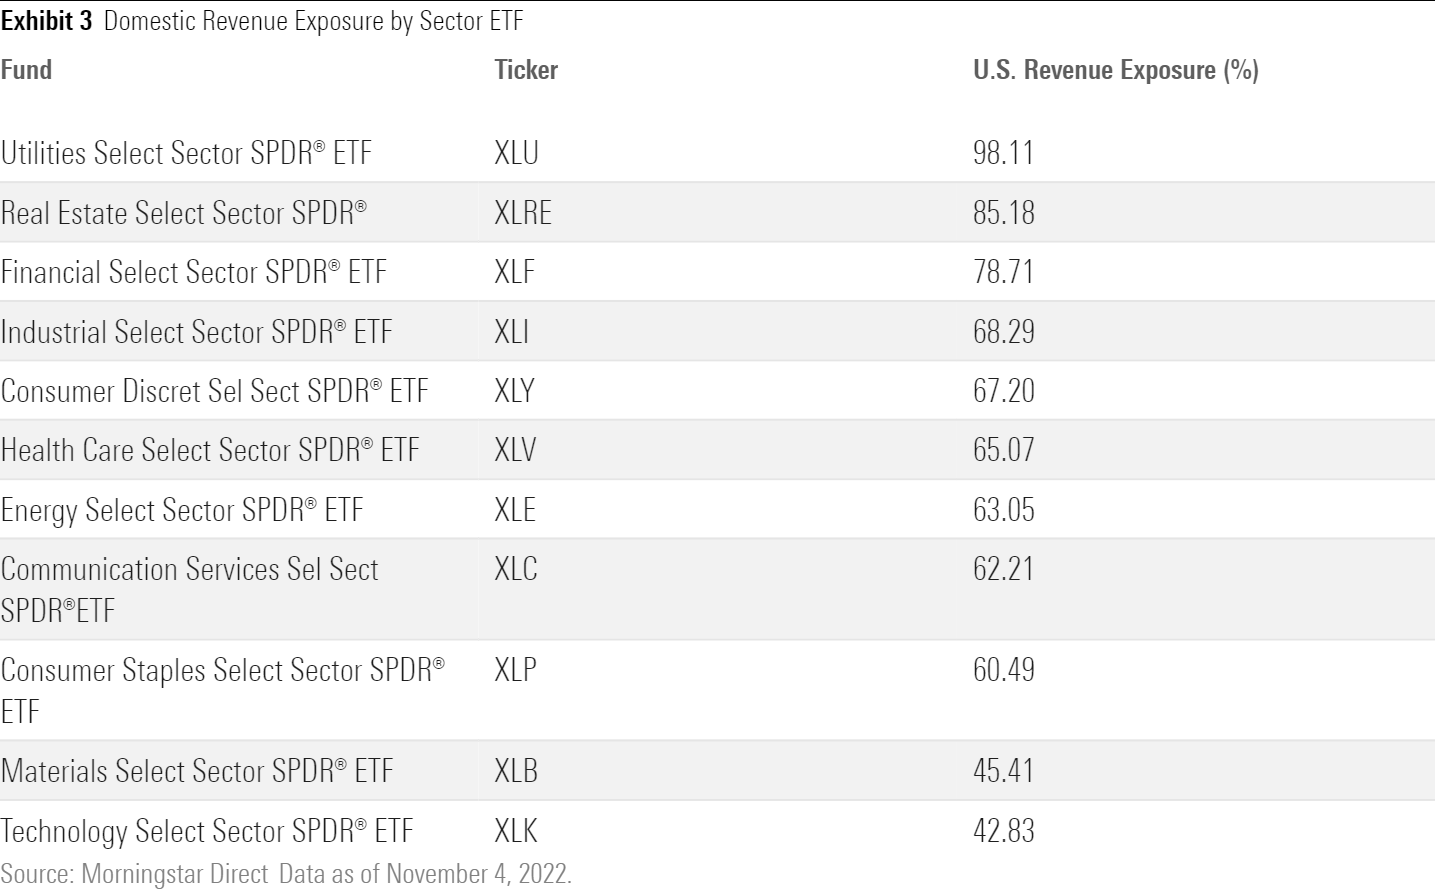 U.S. Revenue Exposure by Sector using SPDR select sector ETFs.